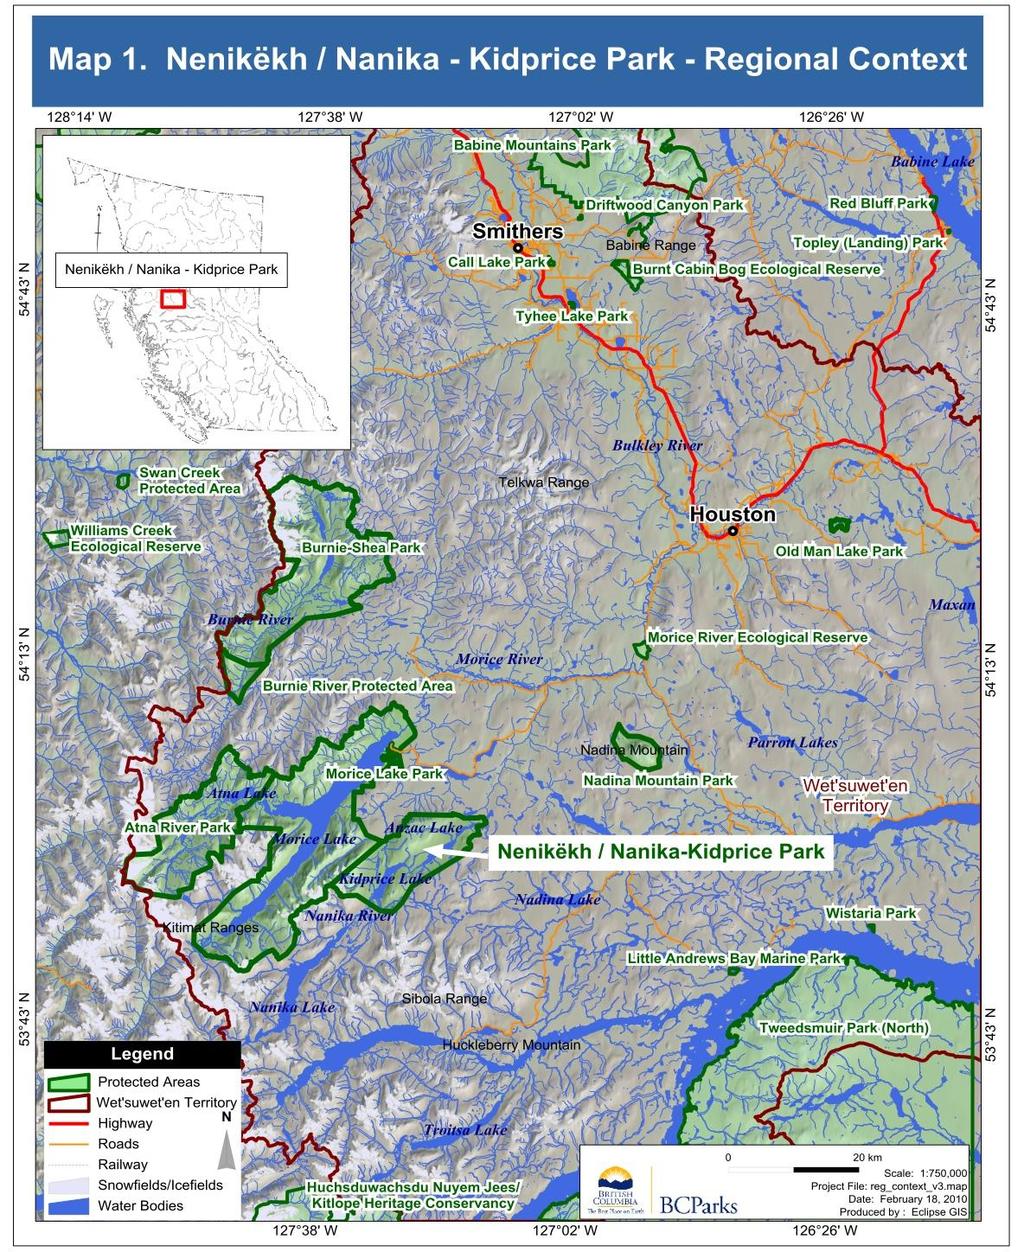 Figure 1: Map 1 enikëkh/anika-kidprice Park Regional Context